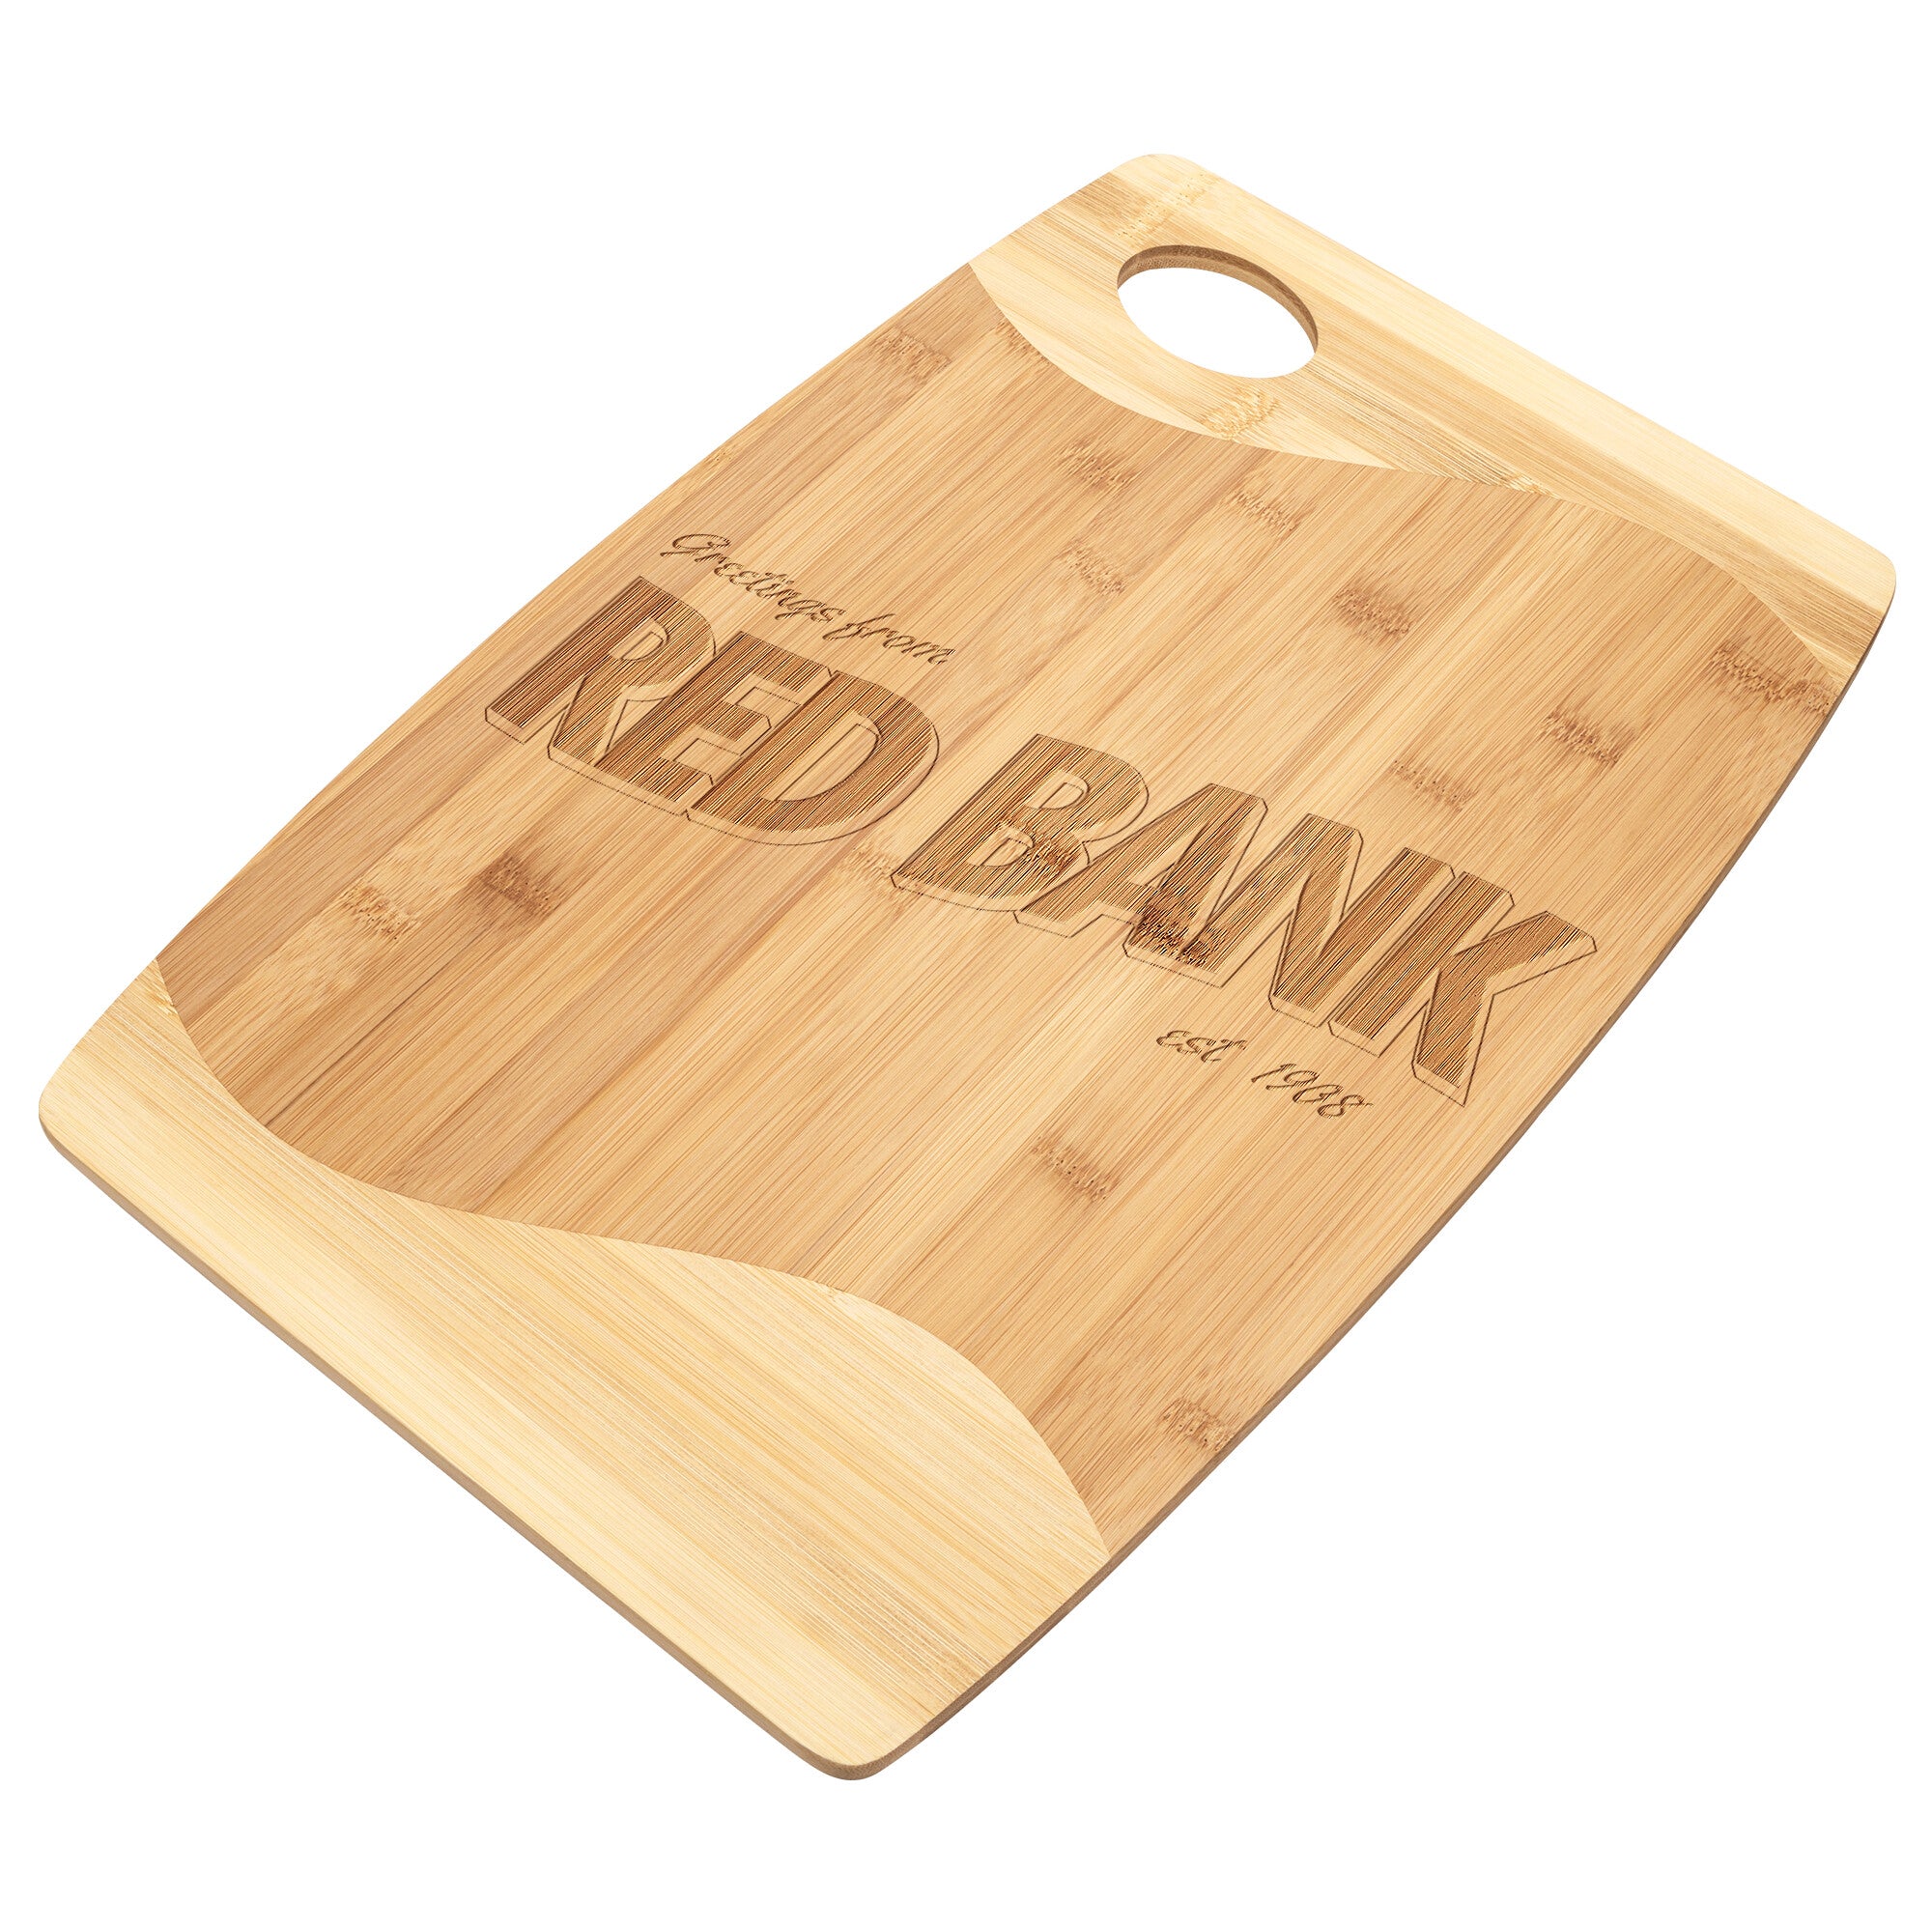 Red Bank Bamboo Cutting Board